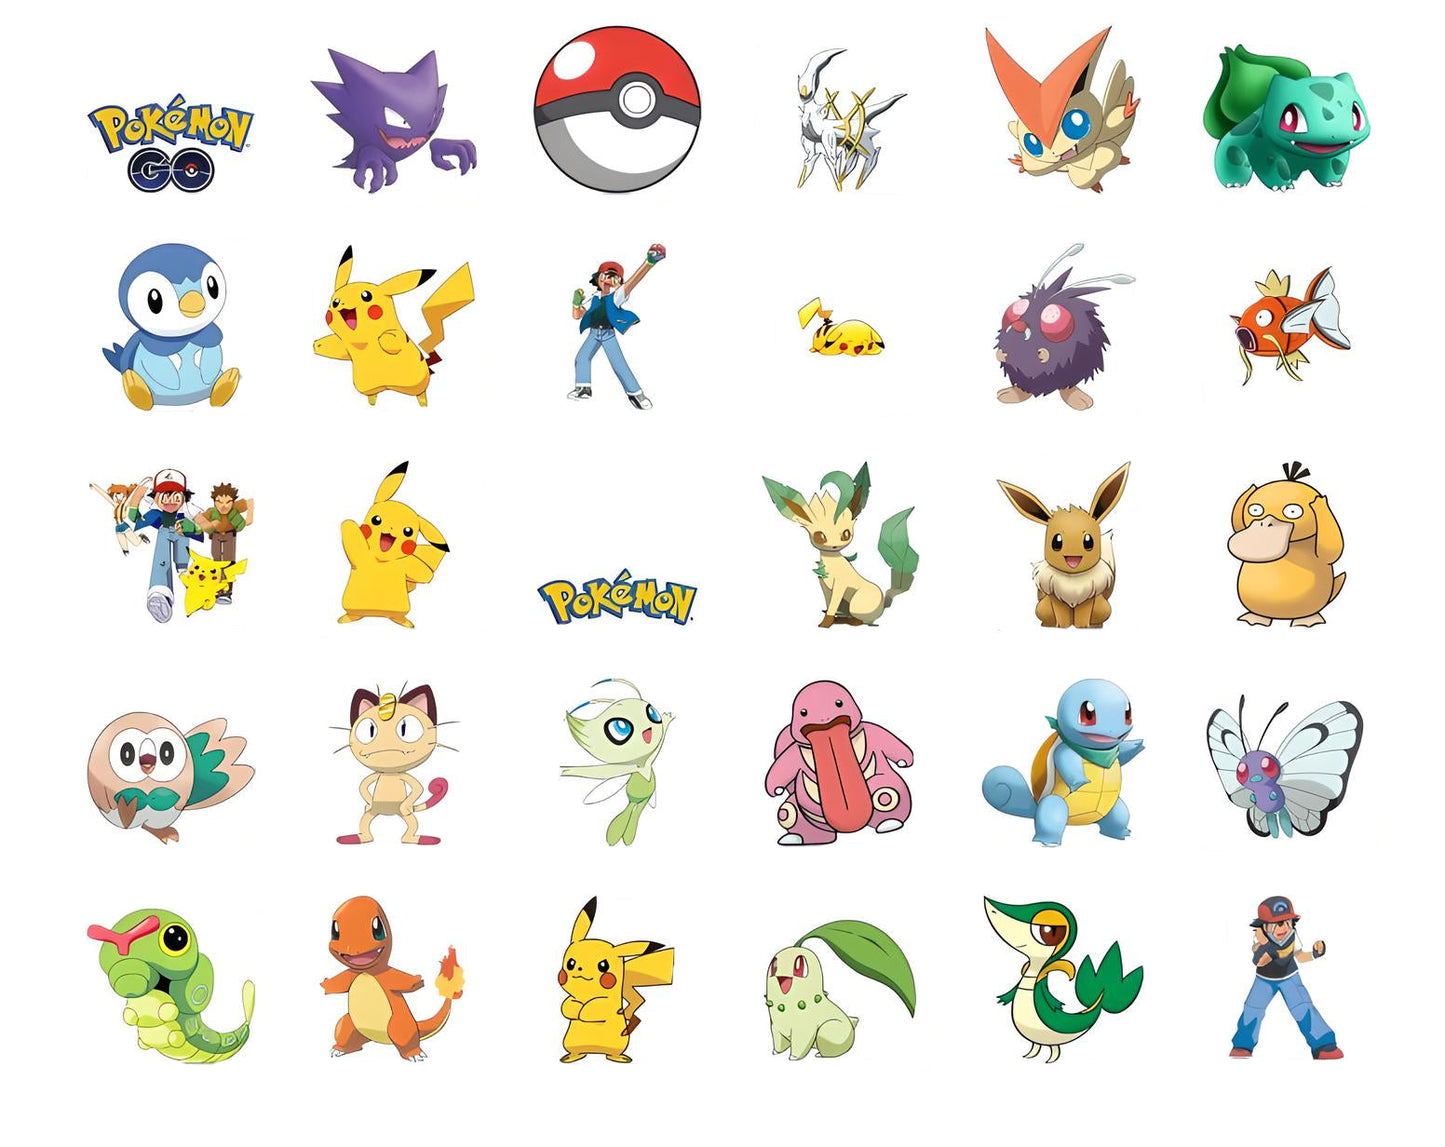 Pokemon PNG Bundle, Pokemon Clipart, Pokemon Birthday, Pokemon Digital Download, Pokemon Characters